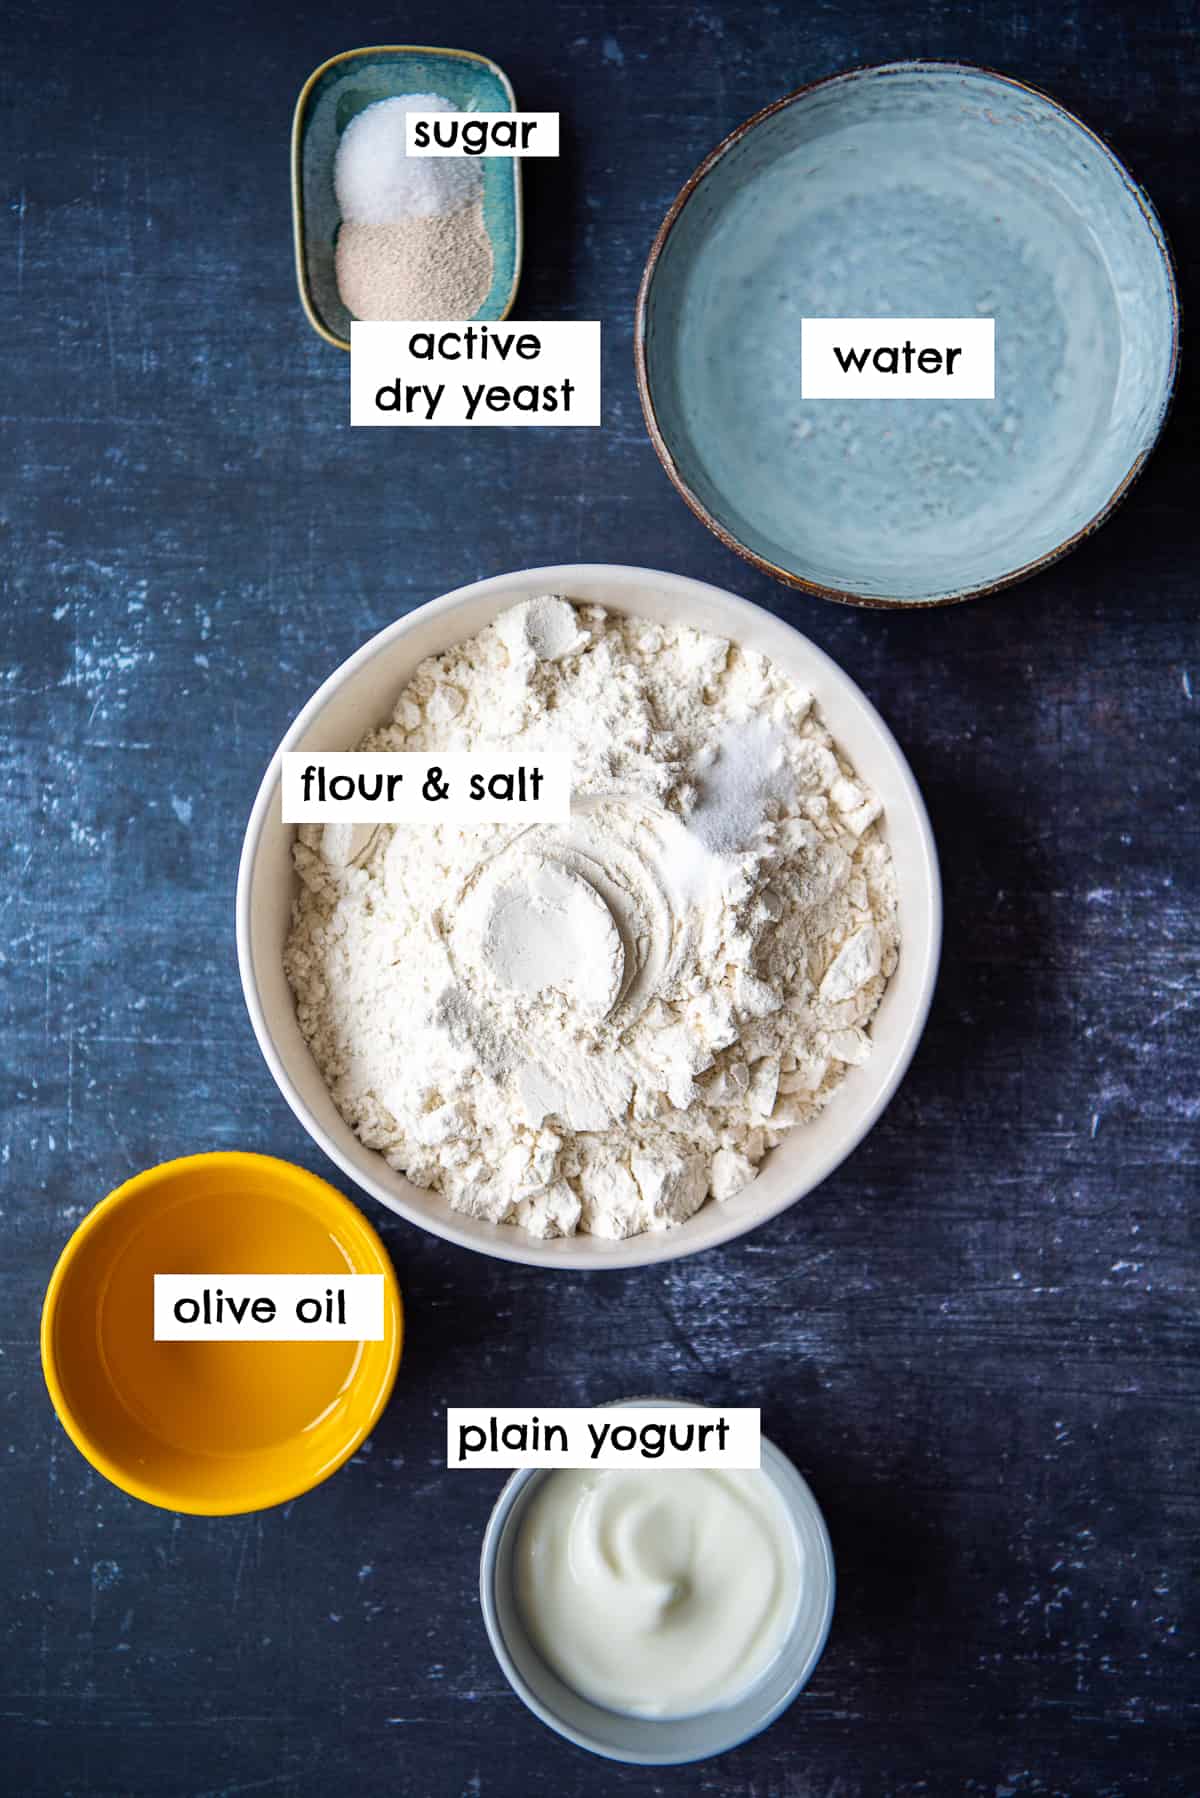 Sugar, yeast, water, flour, Greek yogurt and olive oil photographed on a dark background.